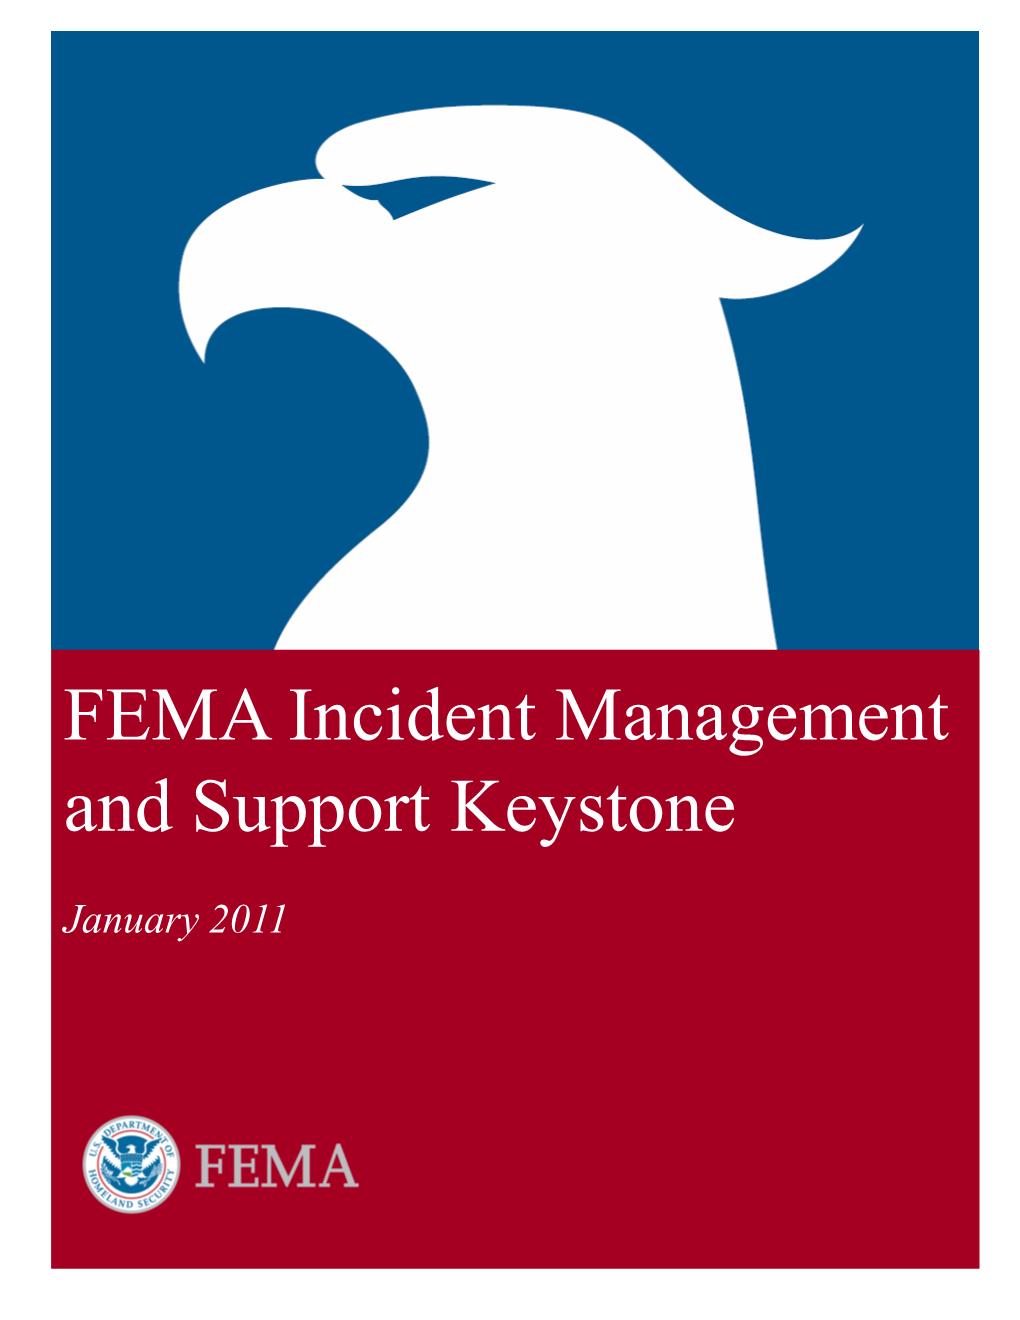 FEMA Incident Management and Support Keystone